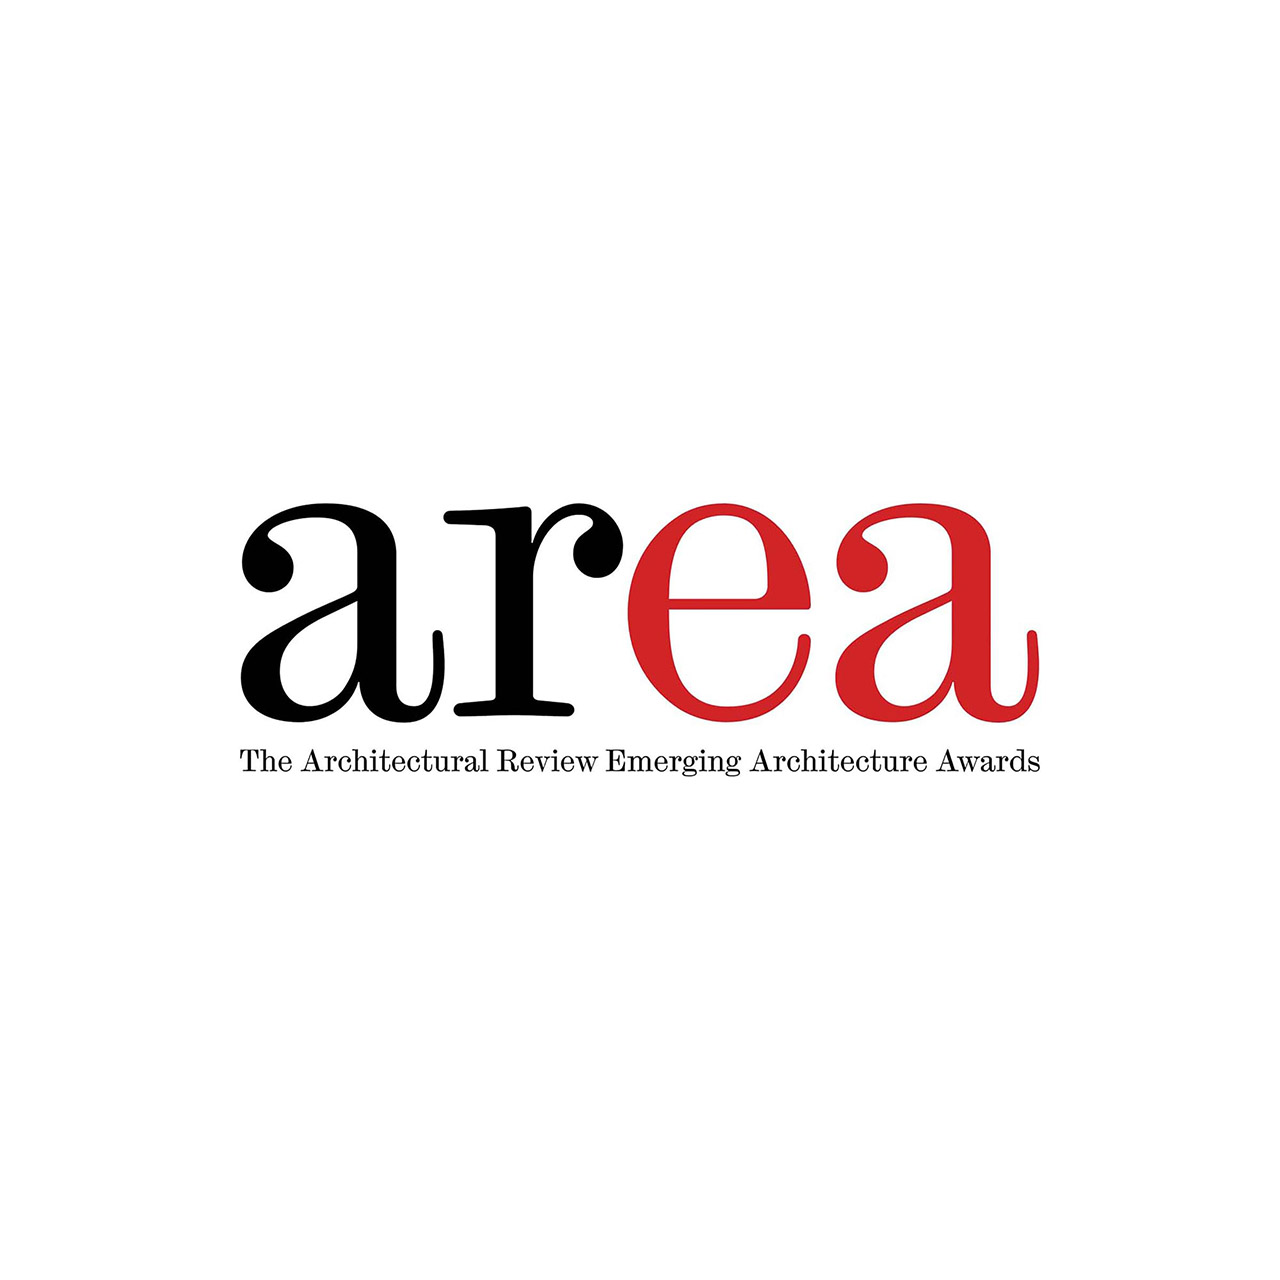 EAA – EMRE AROLAT ARCHITECTURE | MINICITY THEME PARK BUILDING